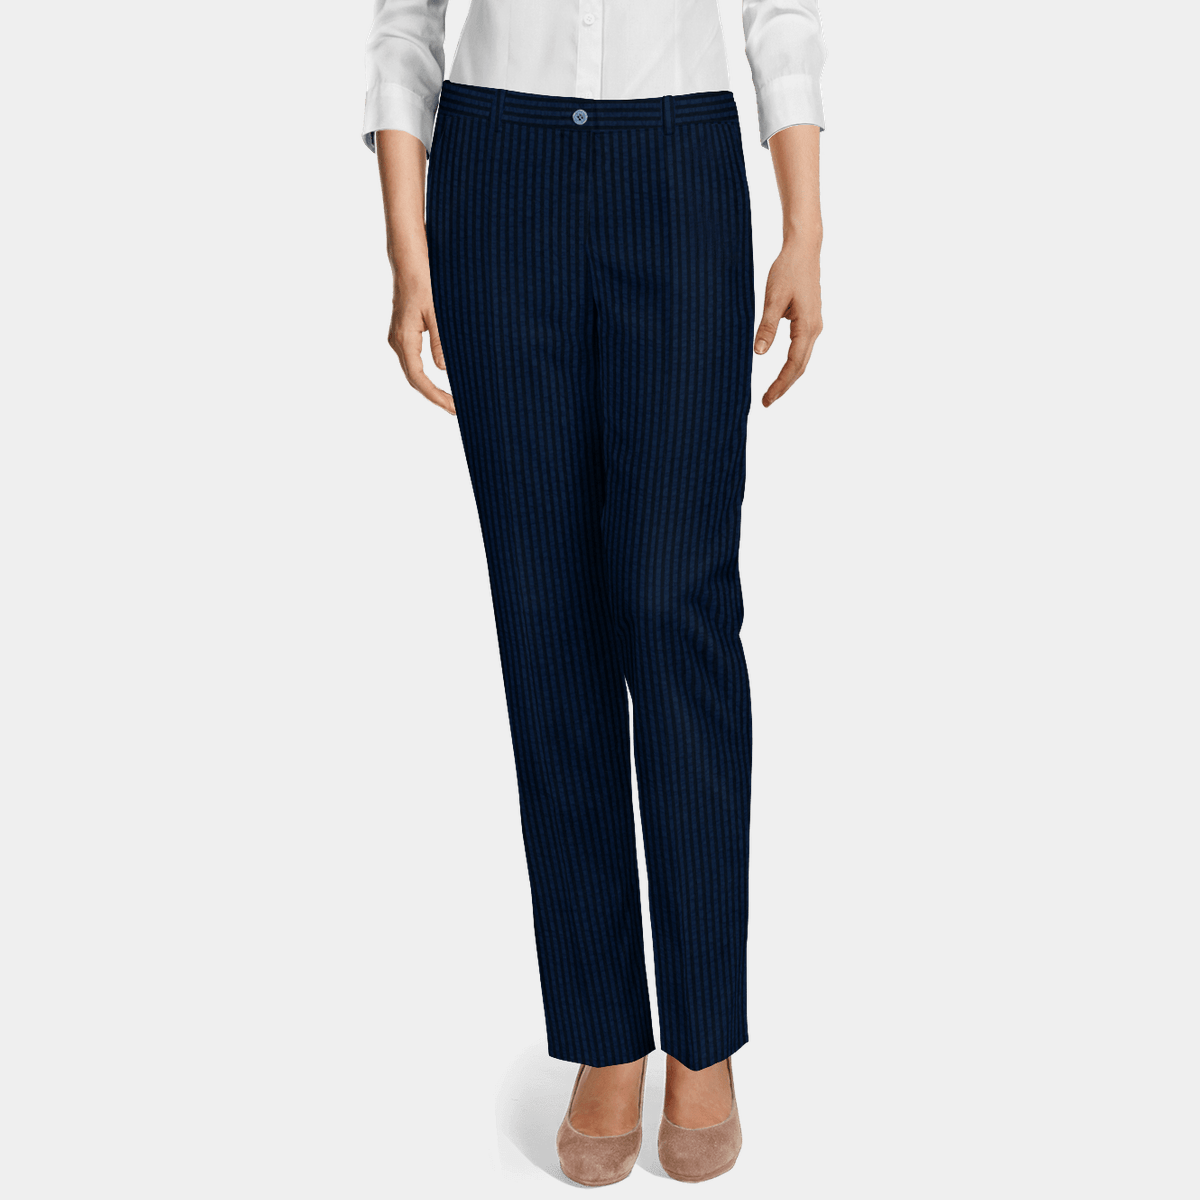 Navy Blue striped flat-front Women Dress Pants | Sumissura